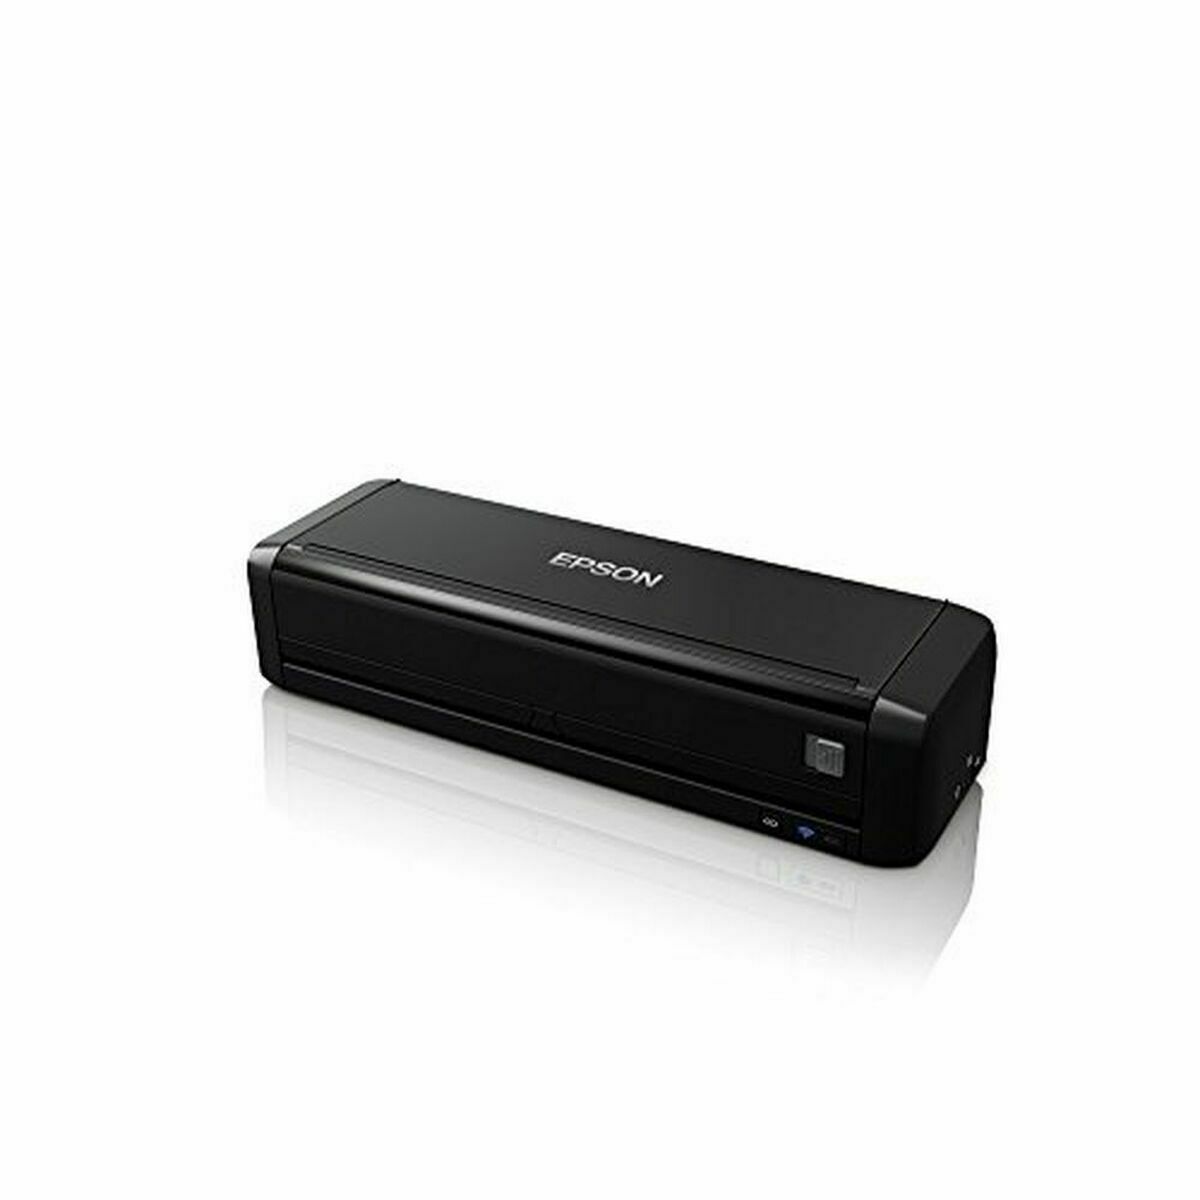 Portable Scanner Epson B11B242401           1200 dpi USB 3.0